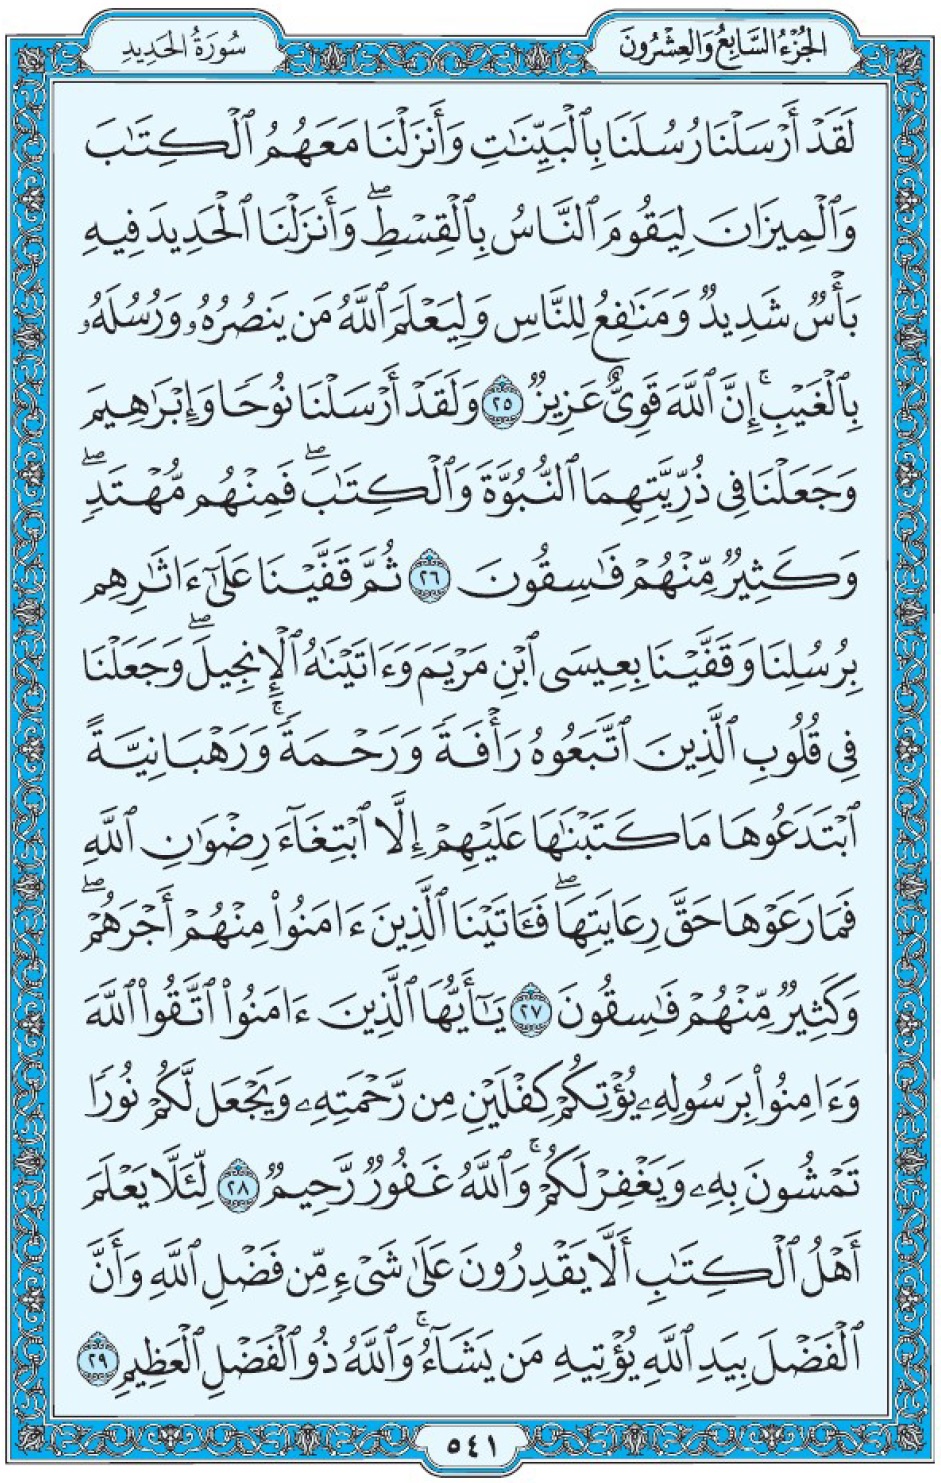 Коран Мединский мусхаф страница 541, сура аль-Хадид, аят 25-29